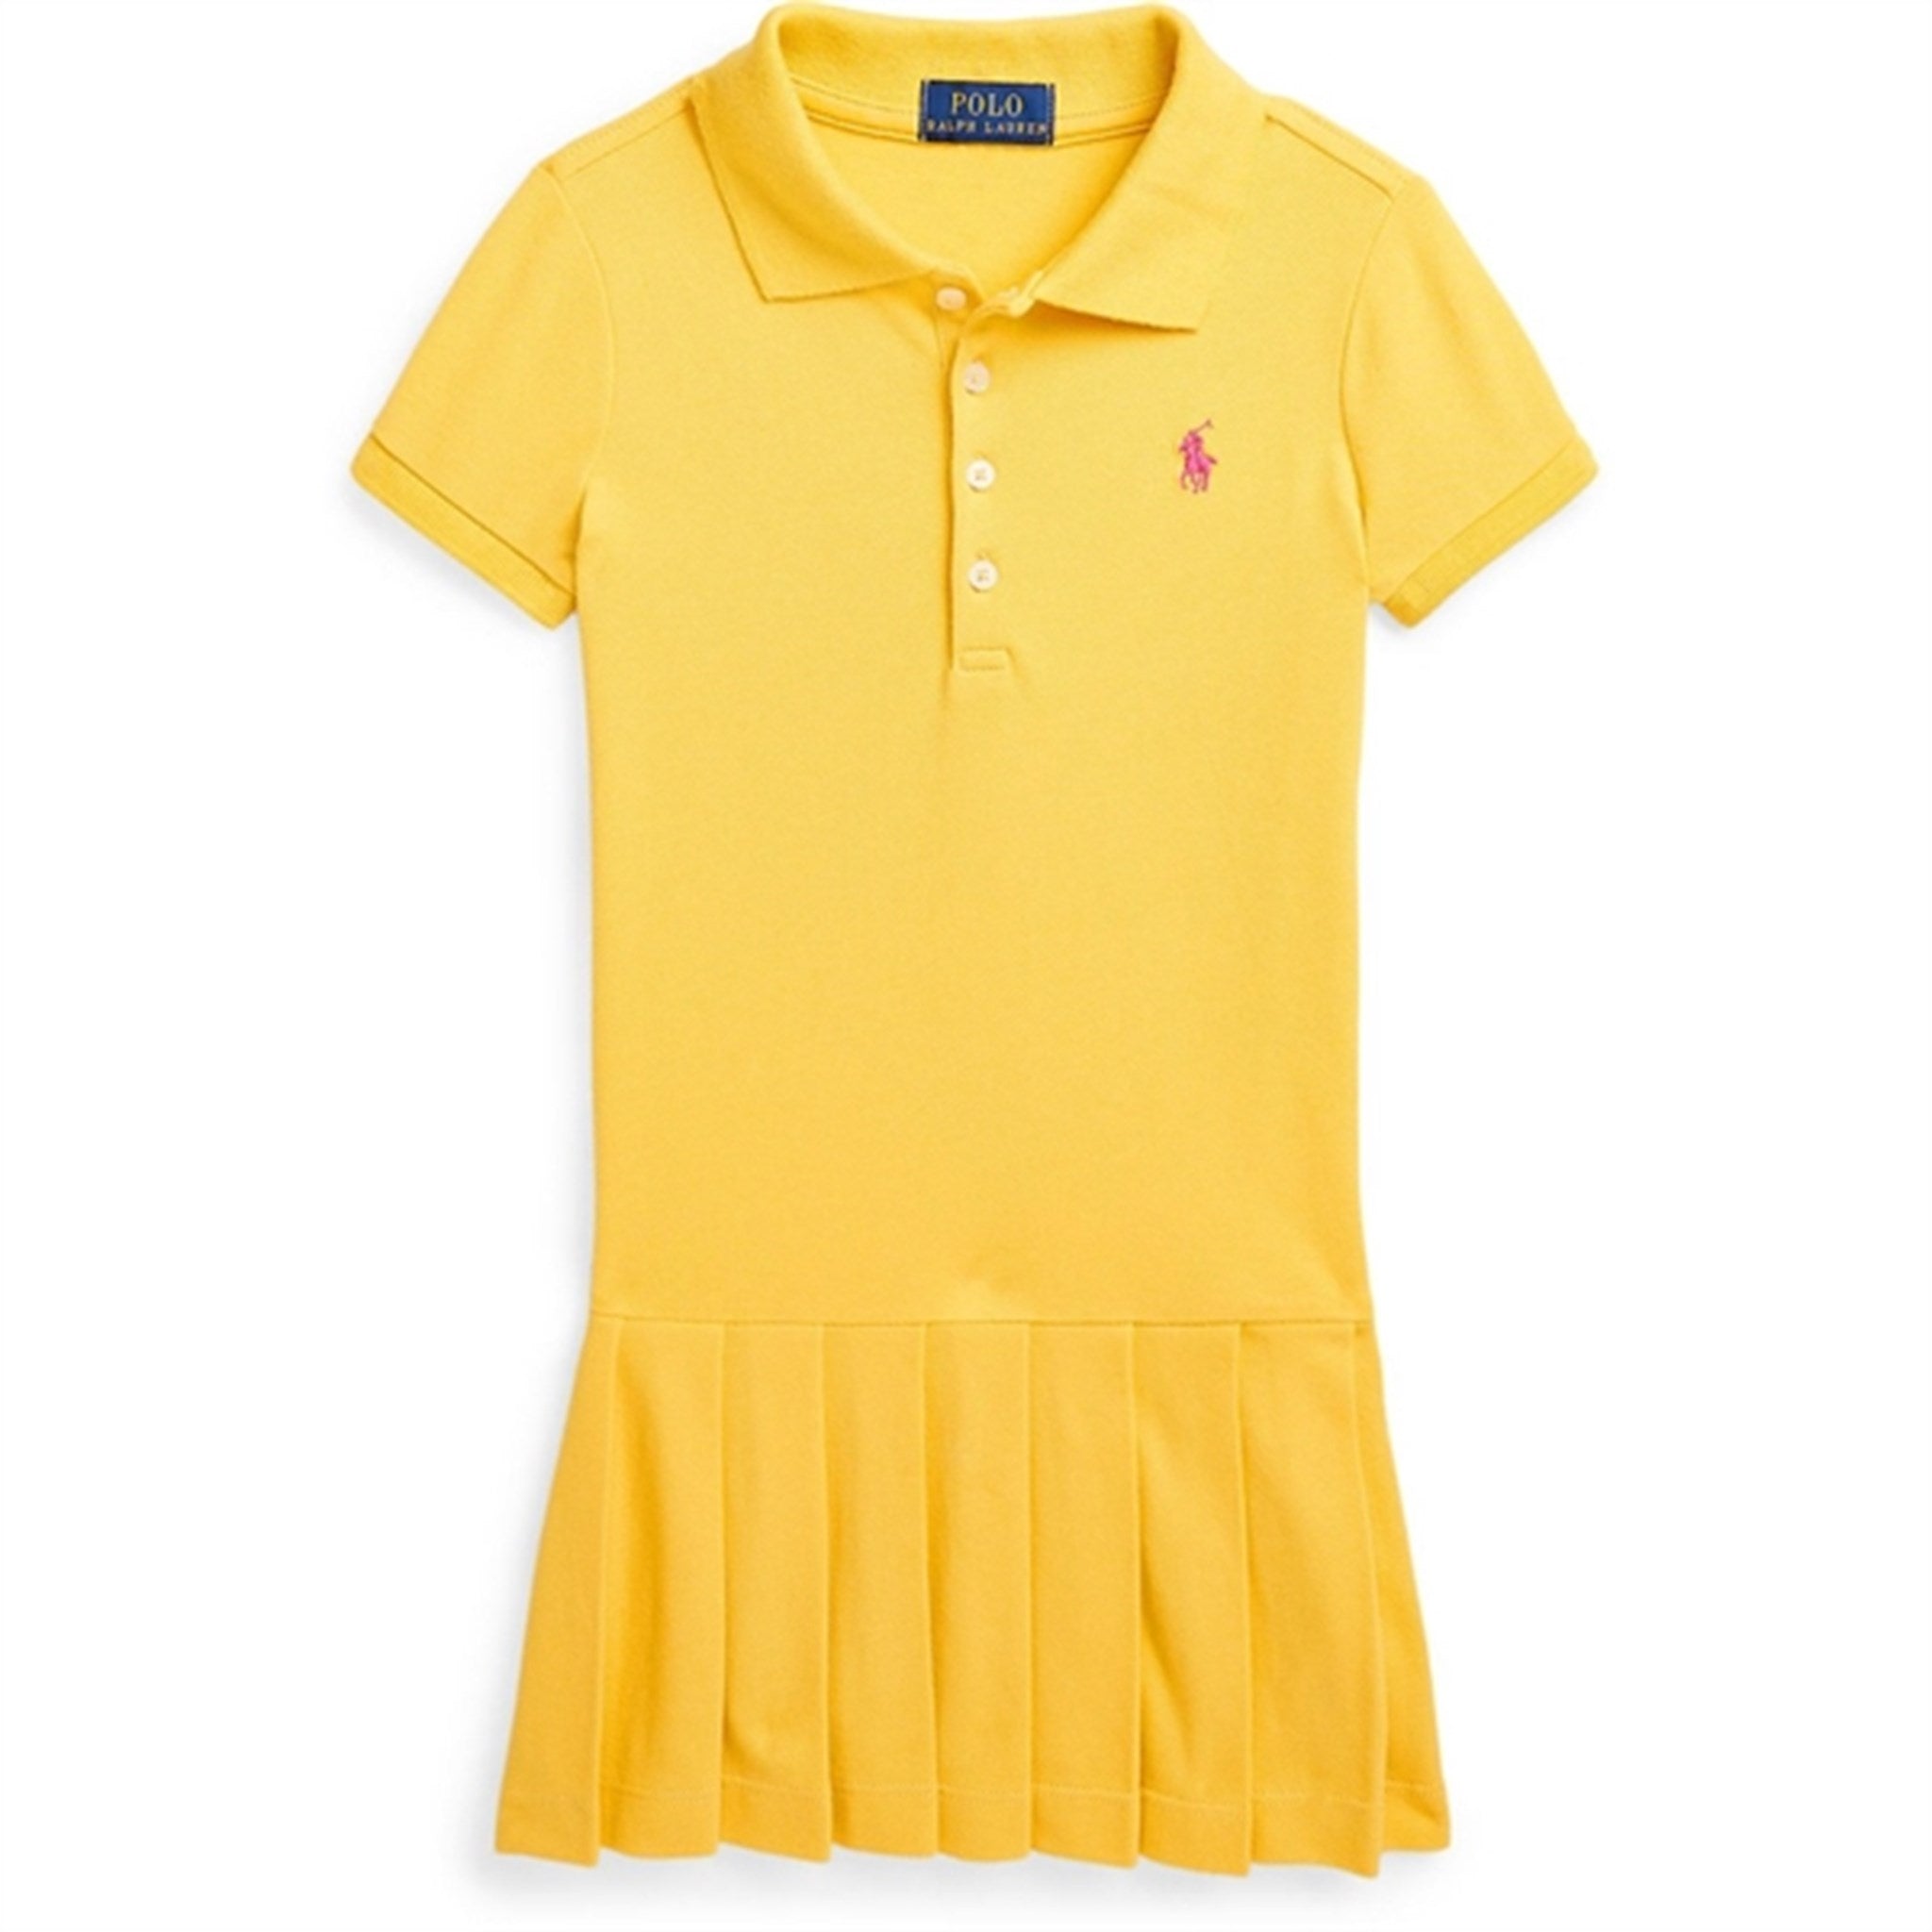 Polo Ralph Lauren Girls Dress Chrome Yellow W/ Bright Pink